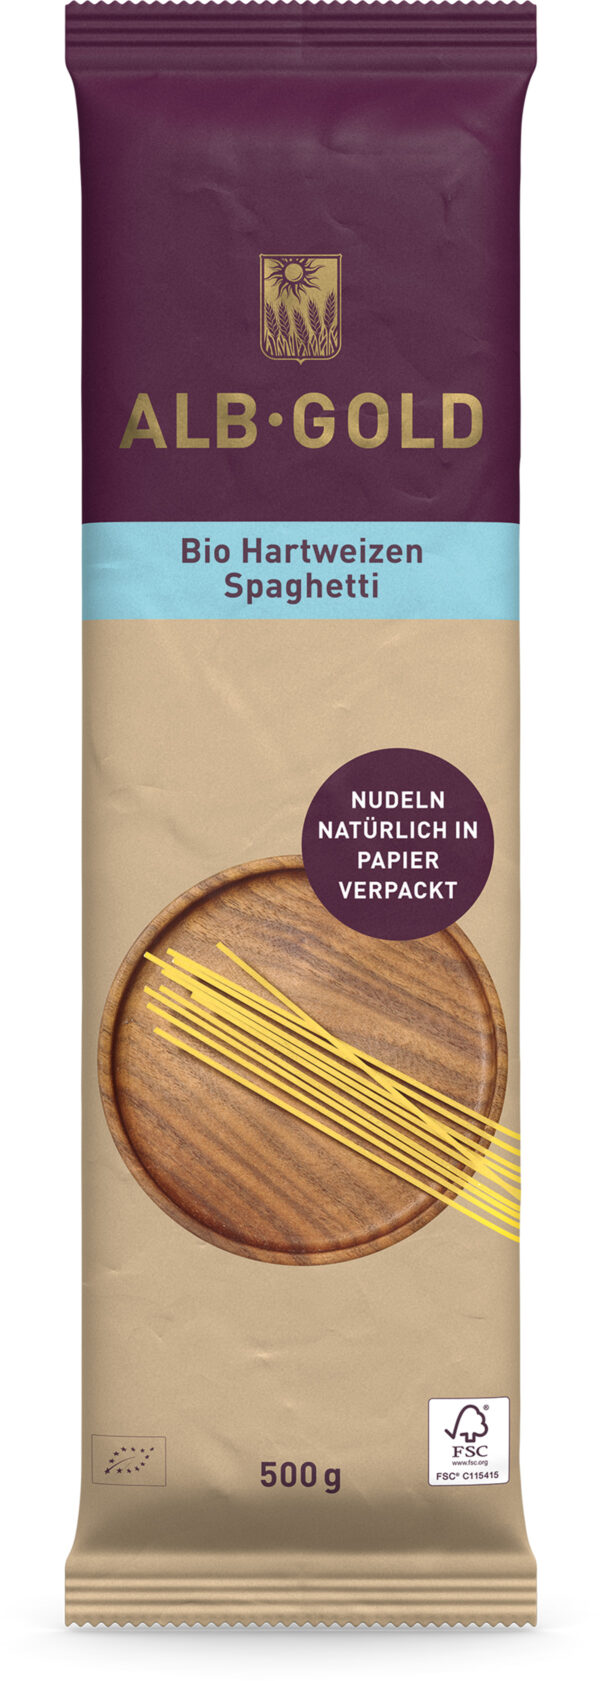 ALB-GOLD Bio Hartweizen Spaghetti 500g ( Papier) 12 x 500g